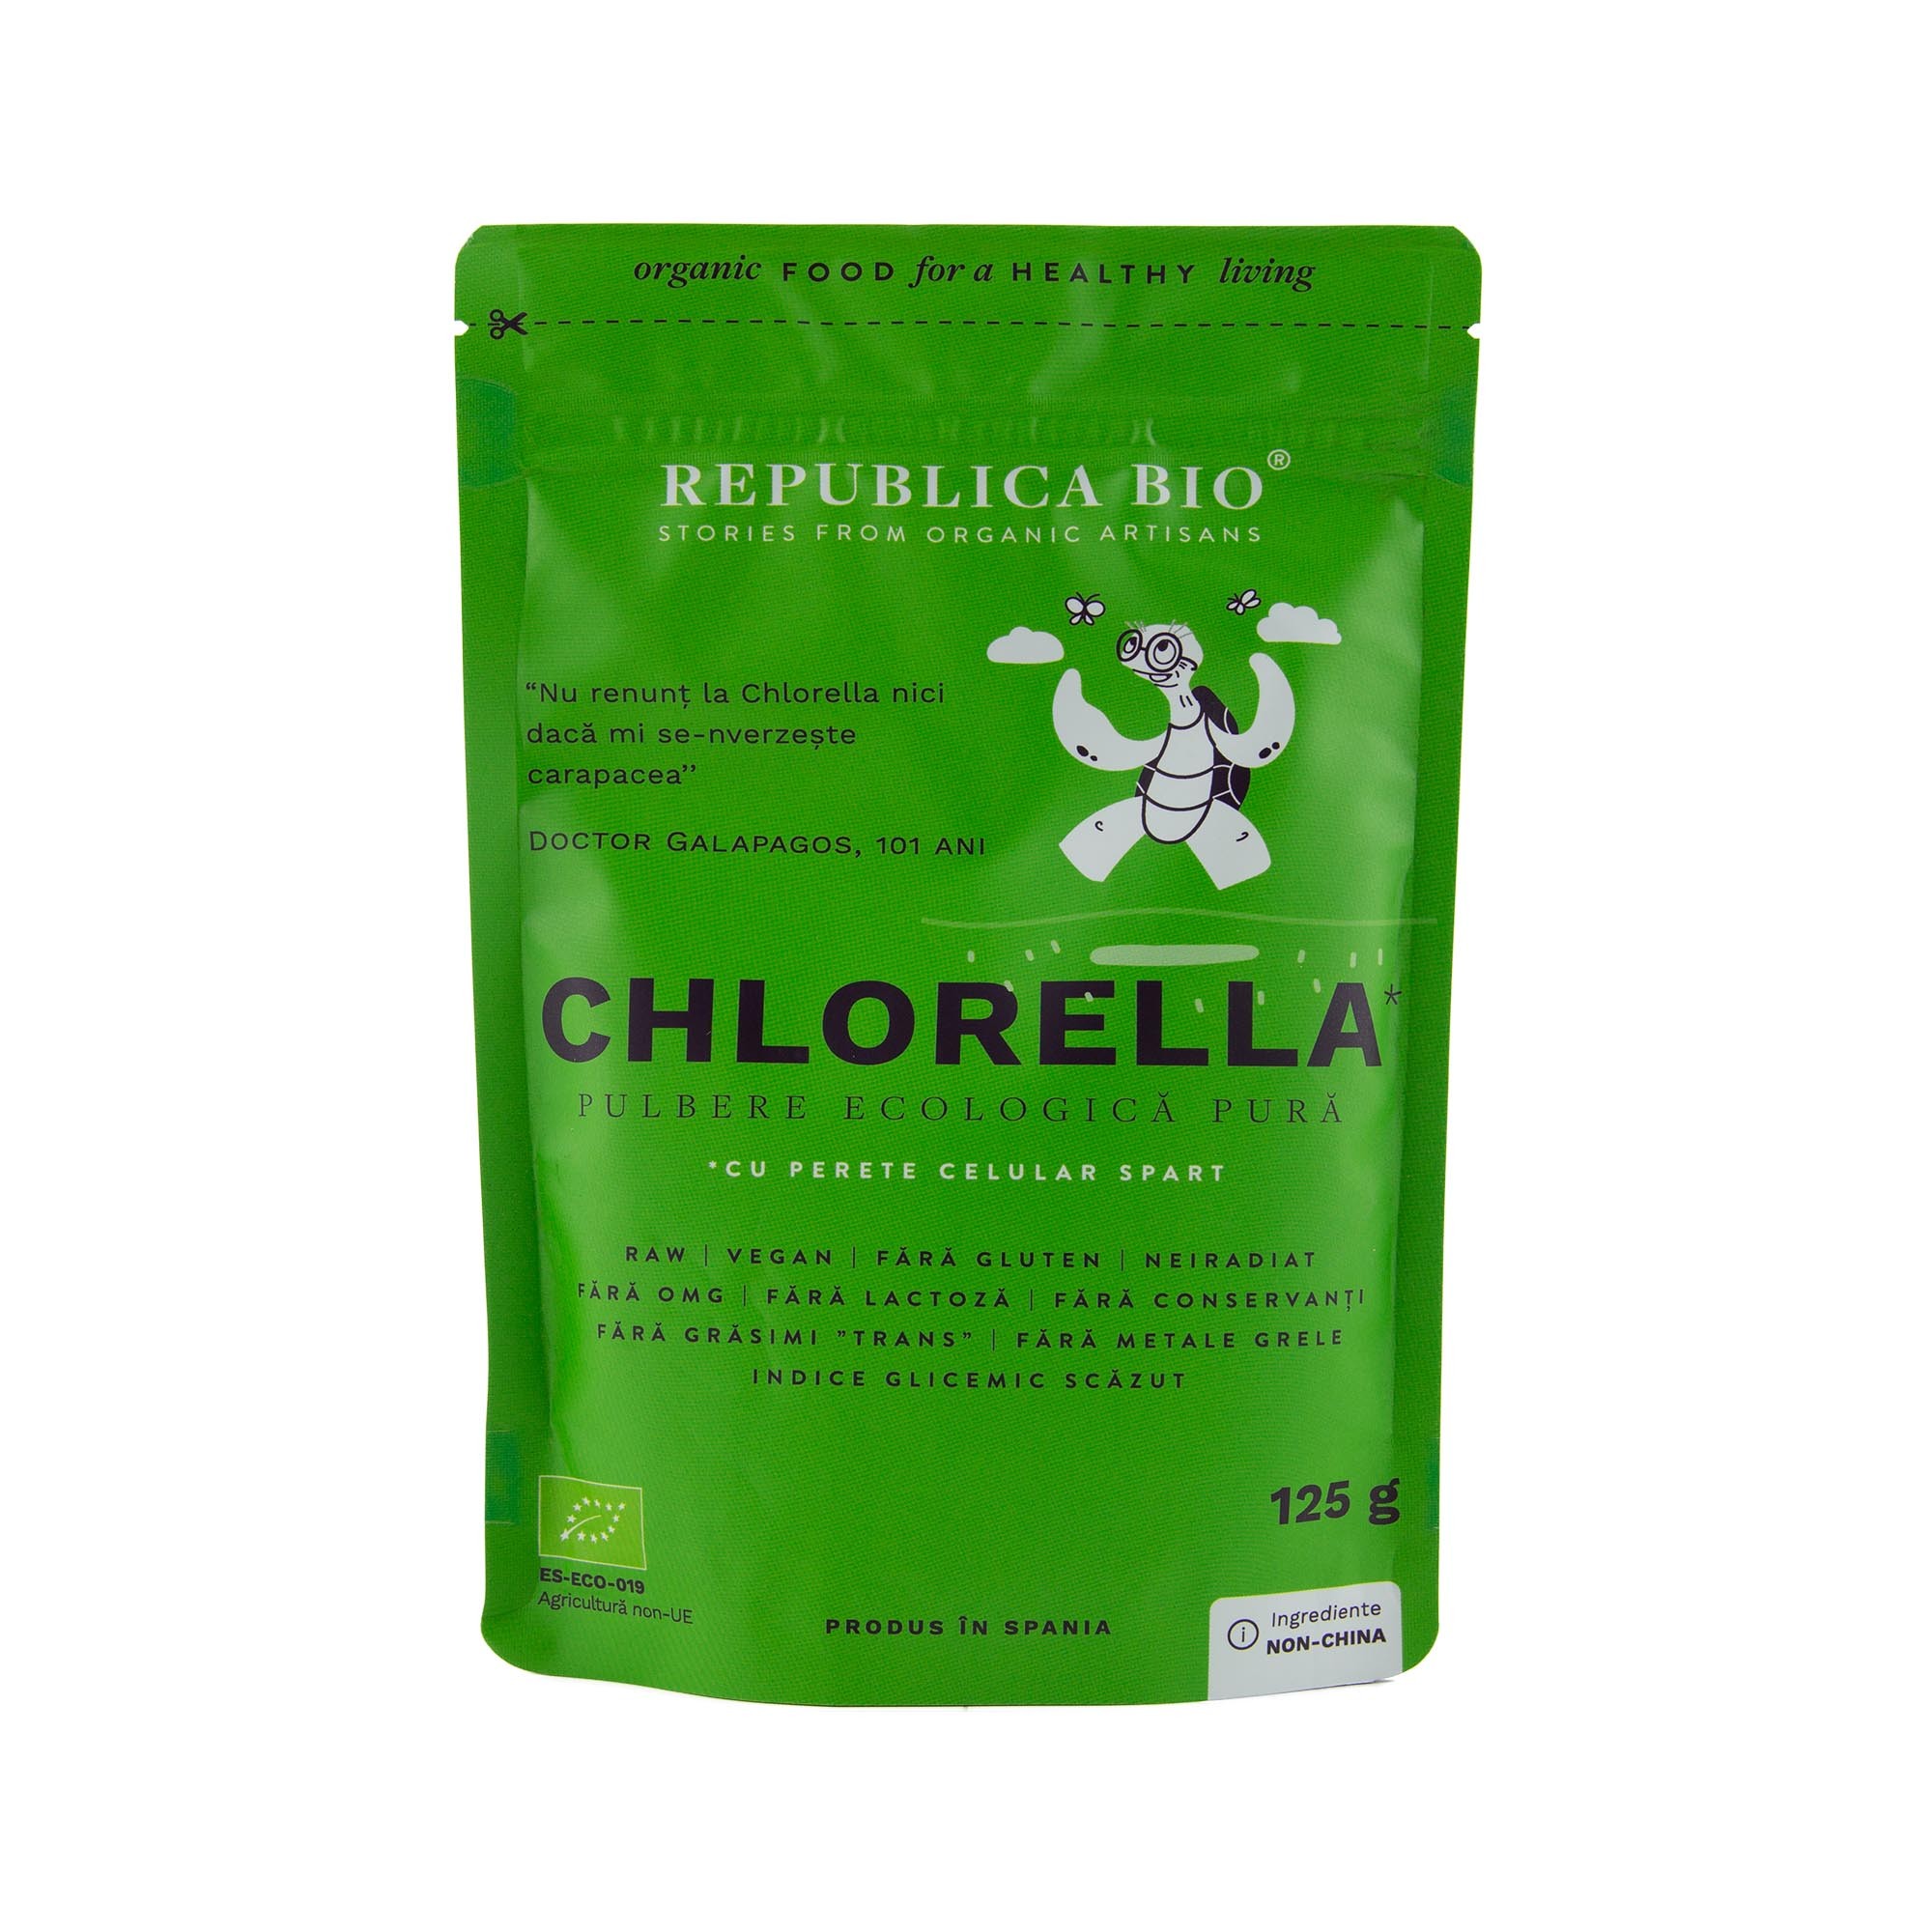 Chlorella, Pulbere Ecologica Pura Republica Bio, 125 G